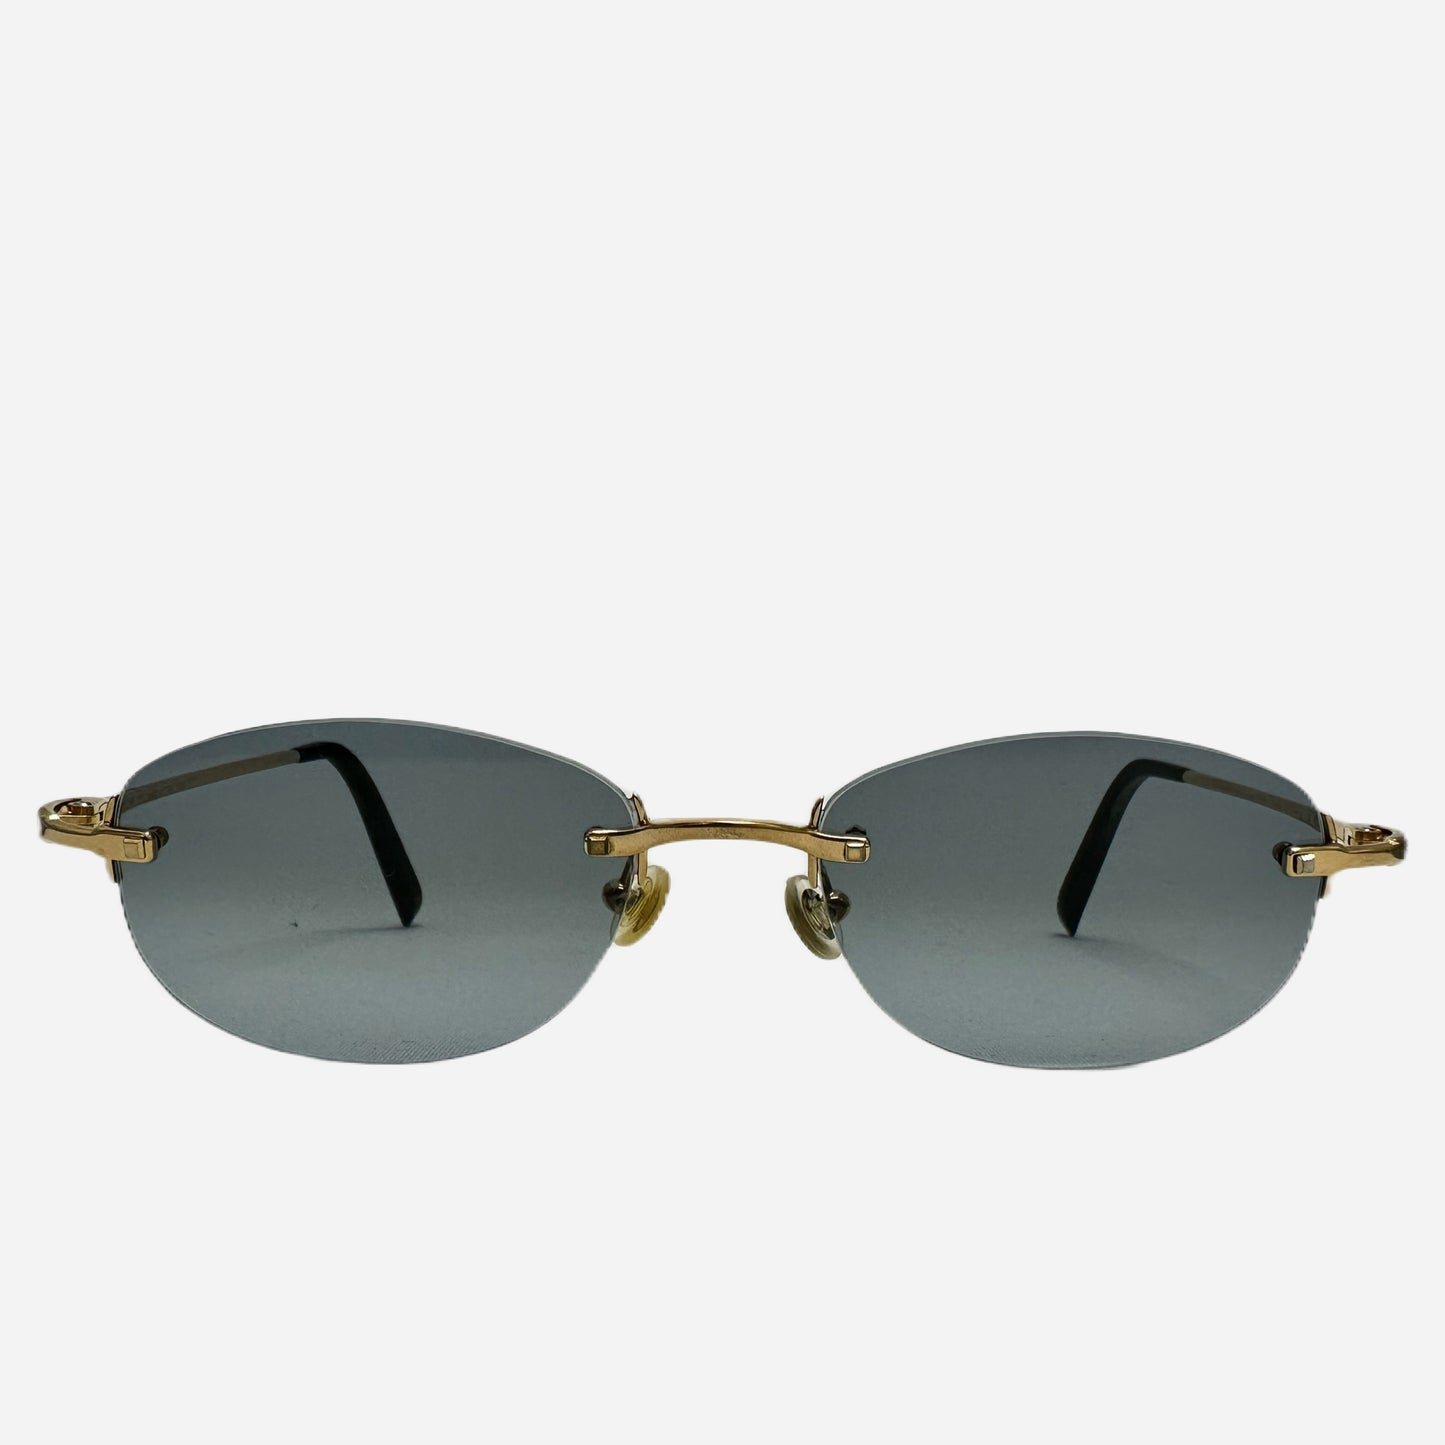 Fred-Paris-Sonnenbrille-Sunglasses-Manhattan-Gold-Sonnenbrille-The-Seekers